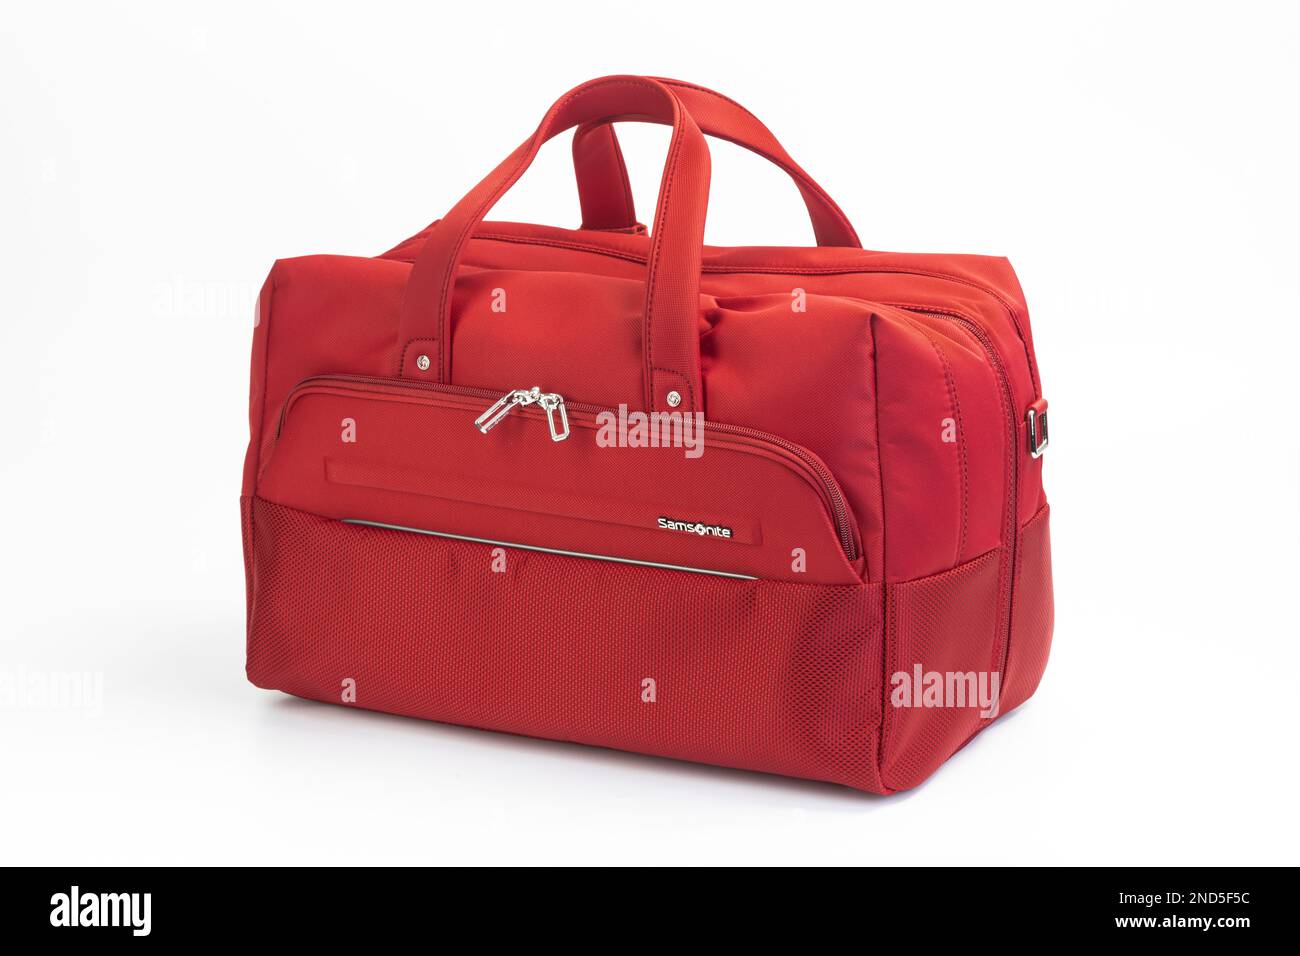 A red, lightweight Samsonite carry on flight bag. Stock Photo